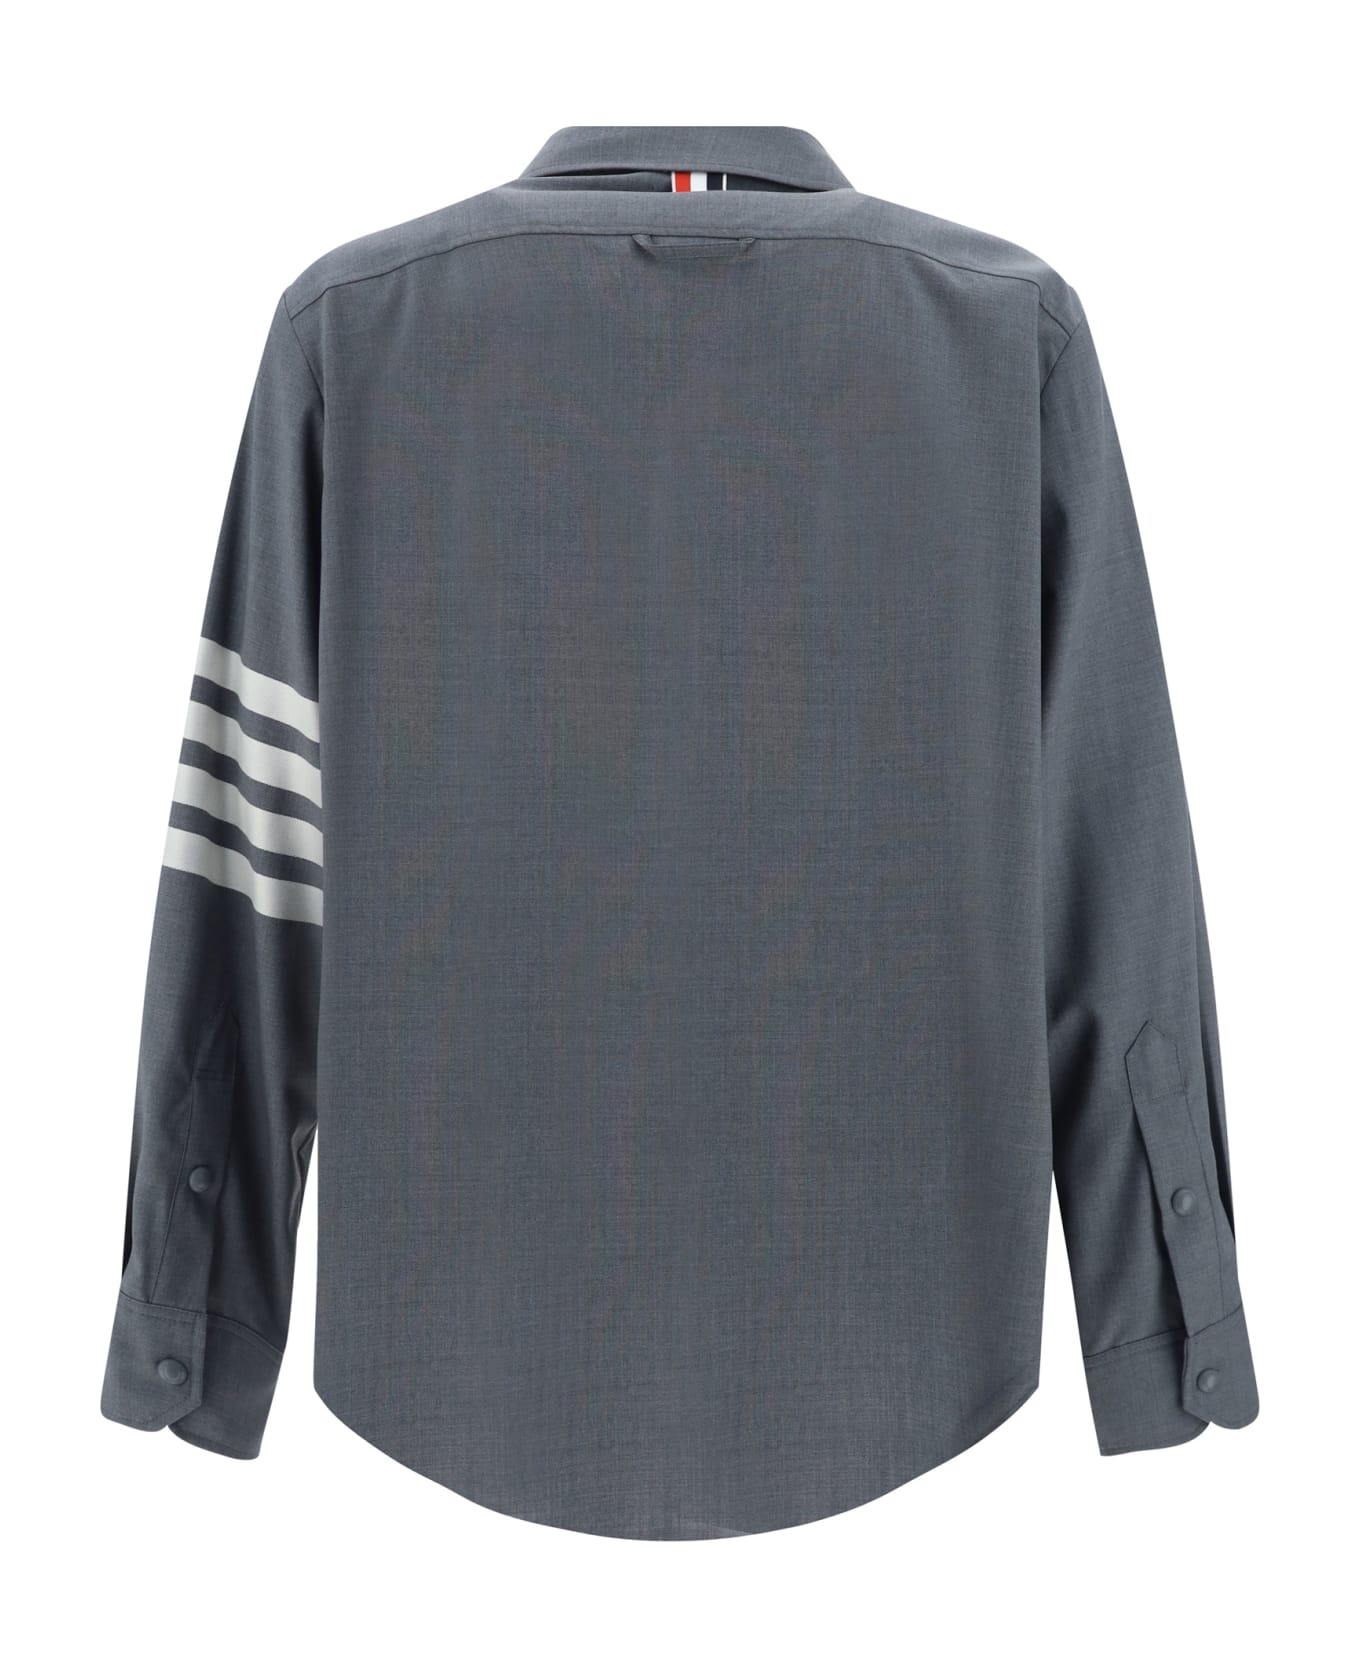 Thom Browne Shirt - Med Grey